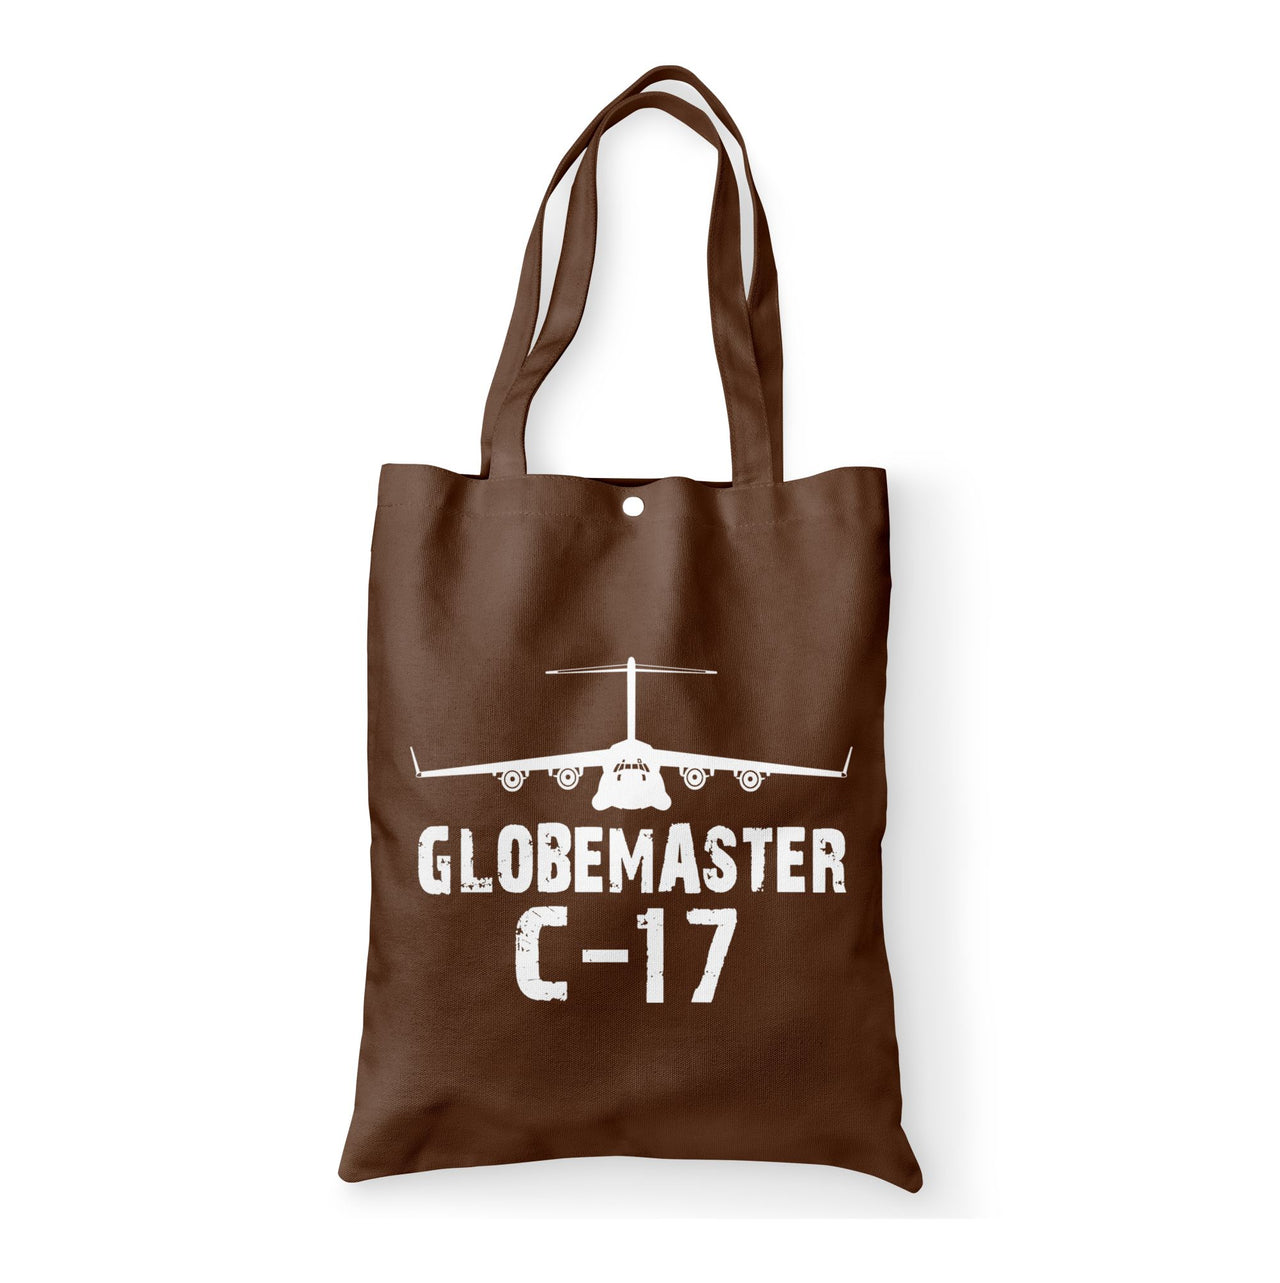 GlobeMaster C-17 & Plane Designed Tote Bags